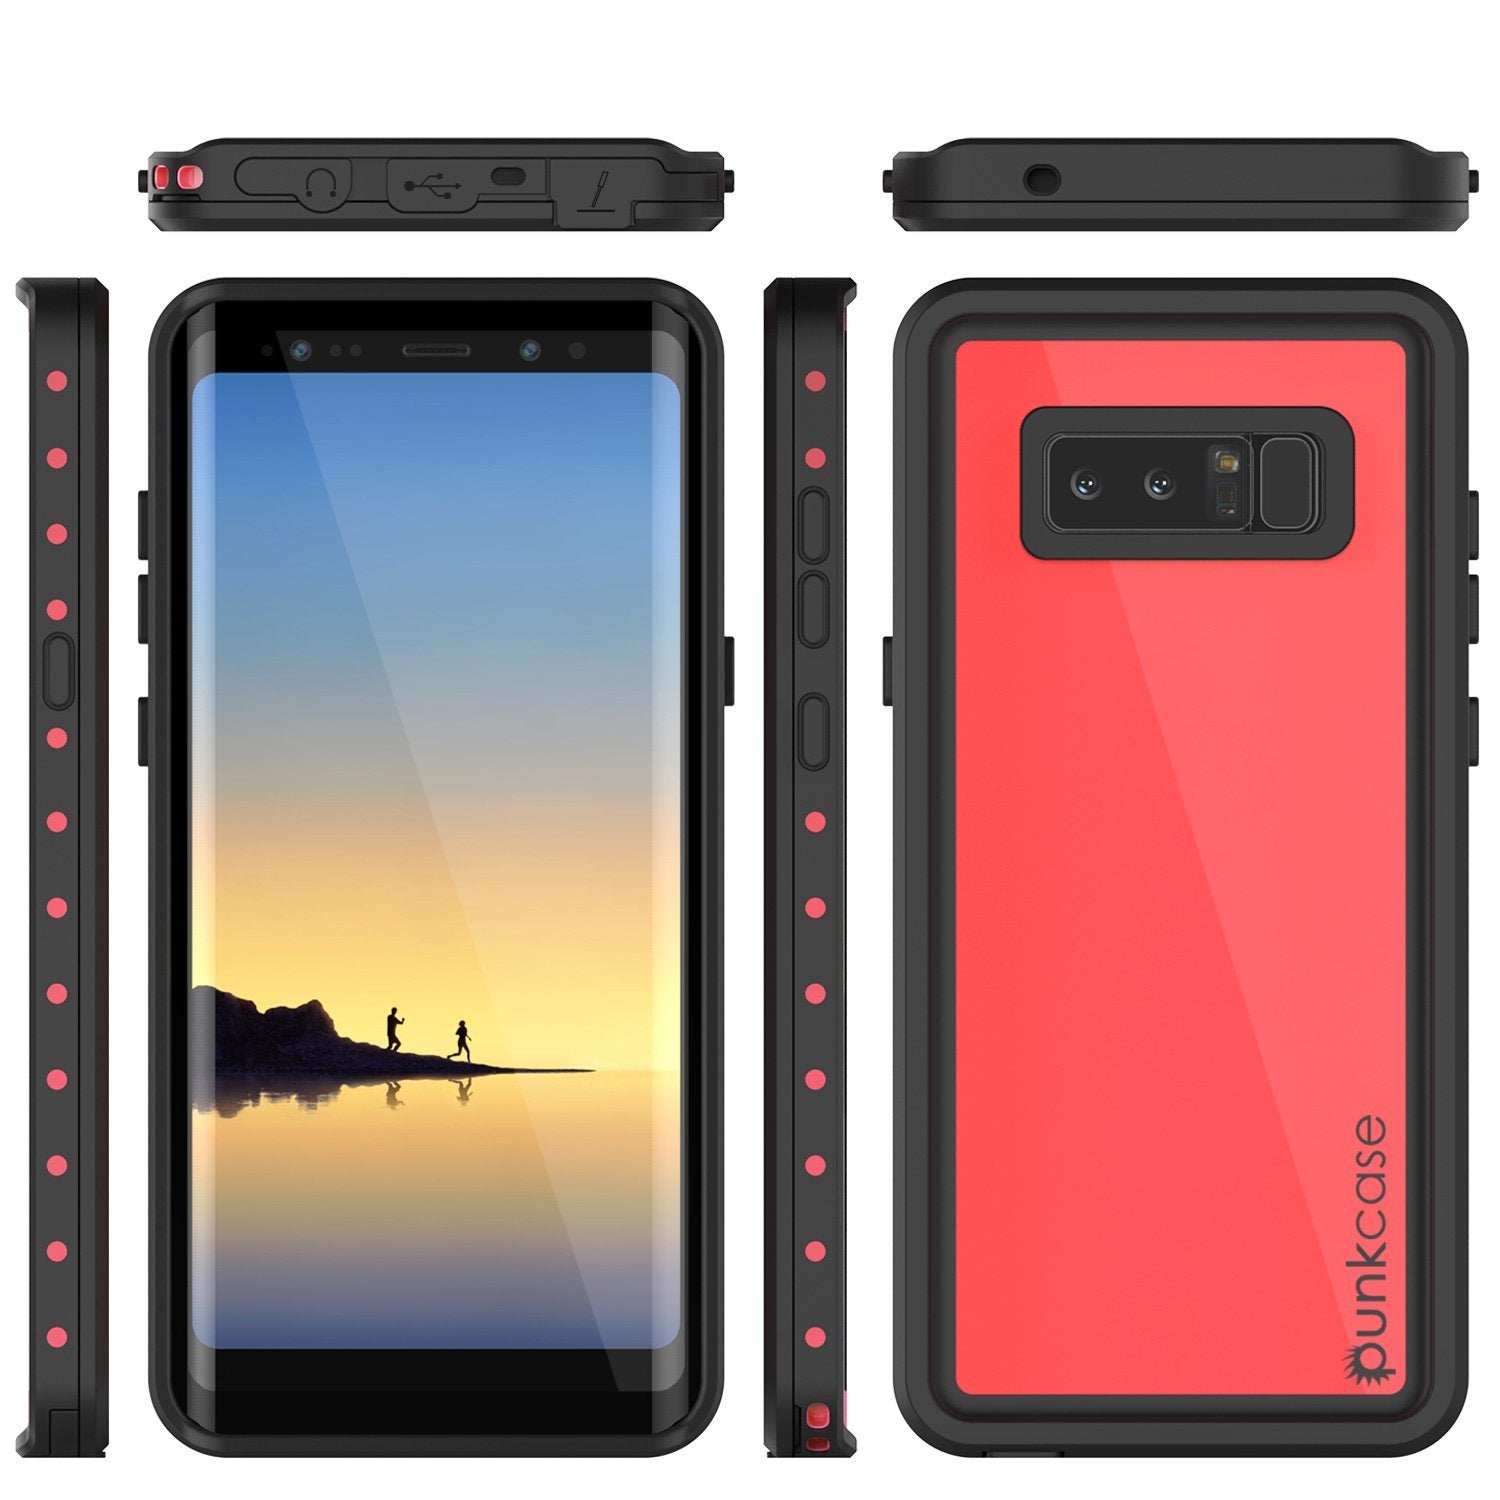 Galaxy Note 8 Waterproof Punkcase, StudStar Series Armor Cover [PINK]